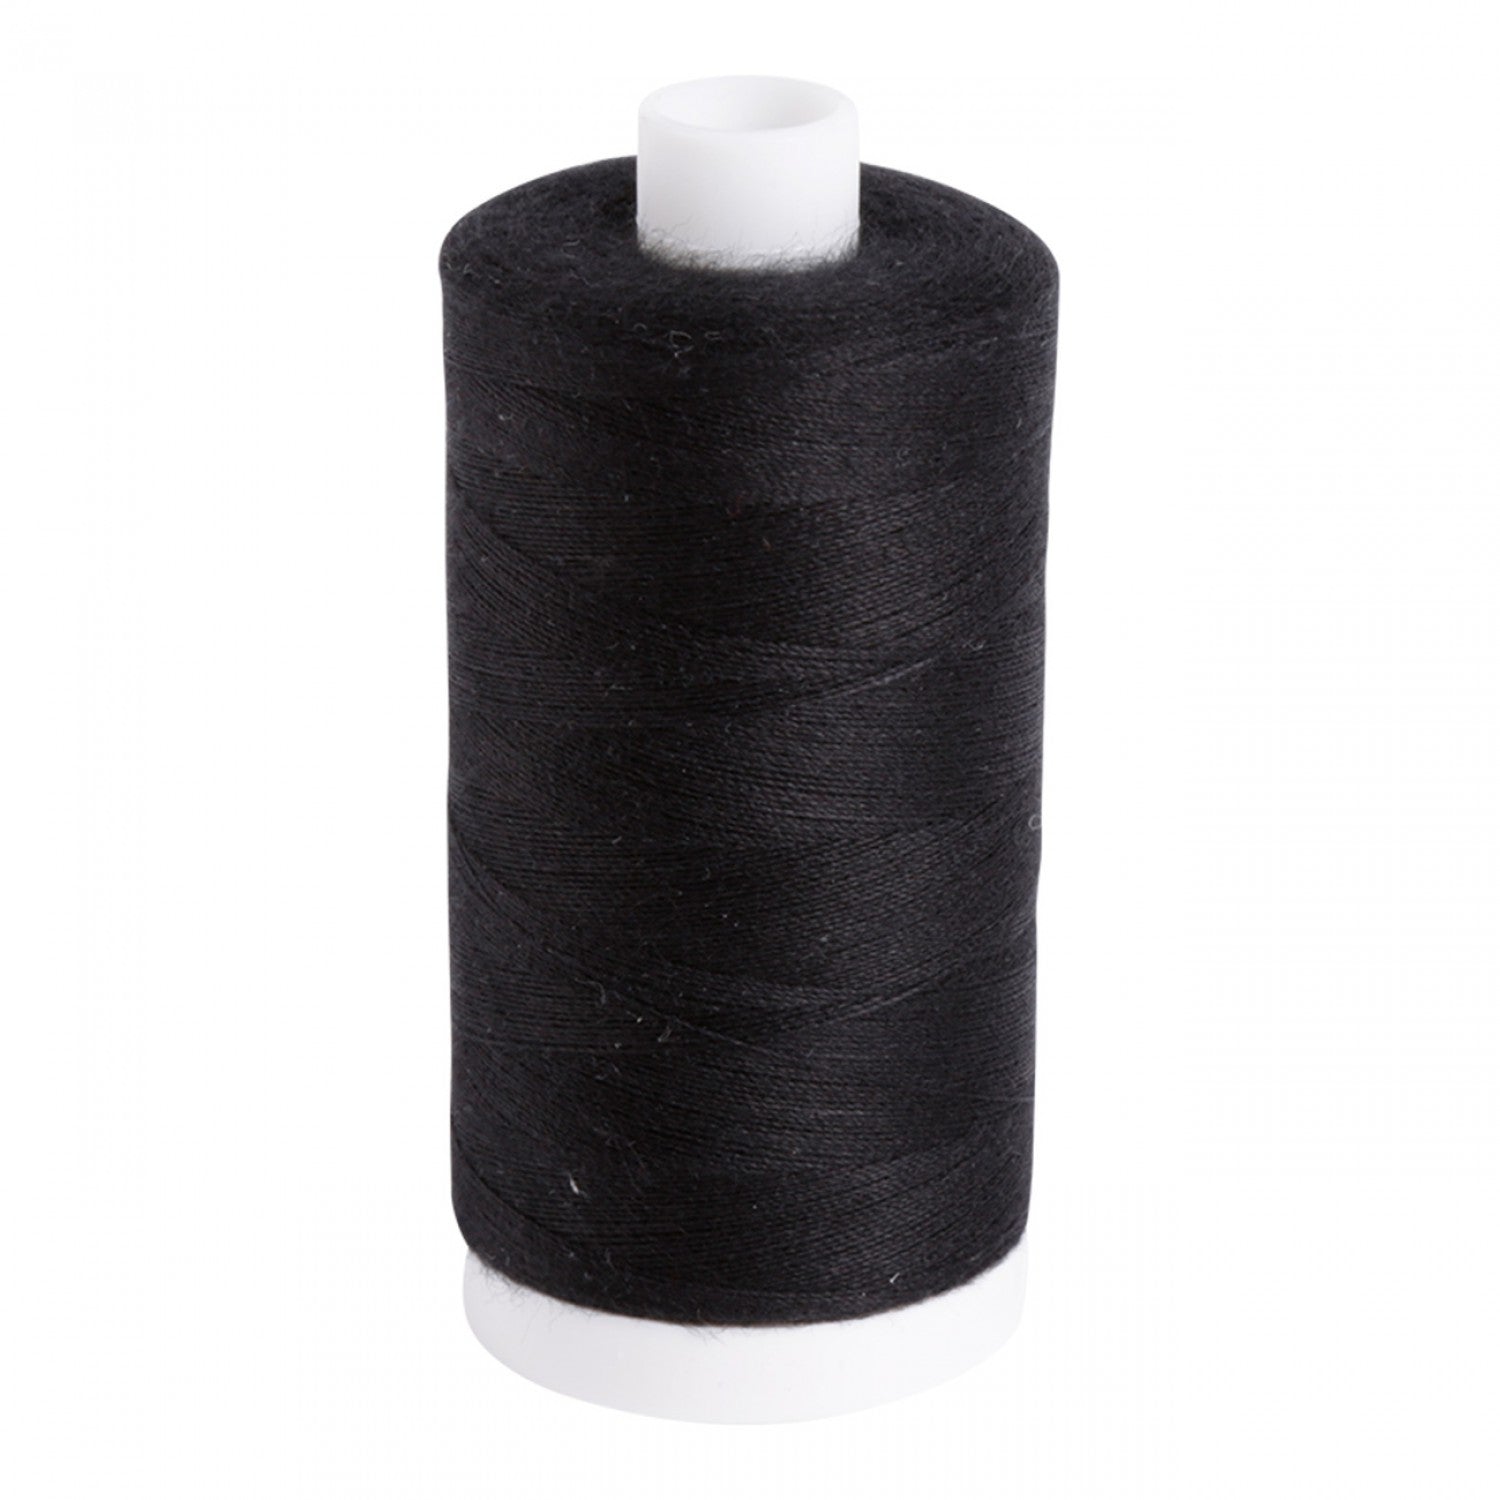 Aurifil Mako 60 wt Cotton Bobbin Thread - Black (1161)